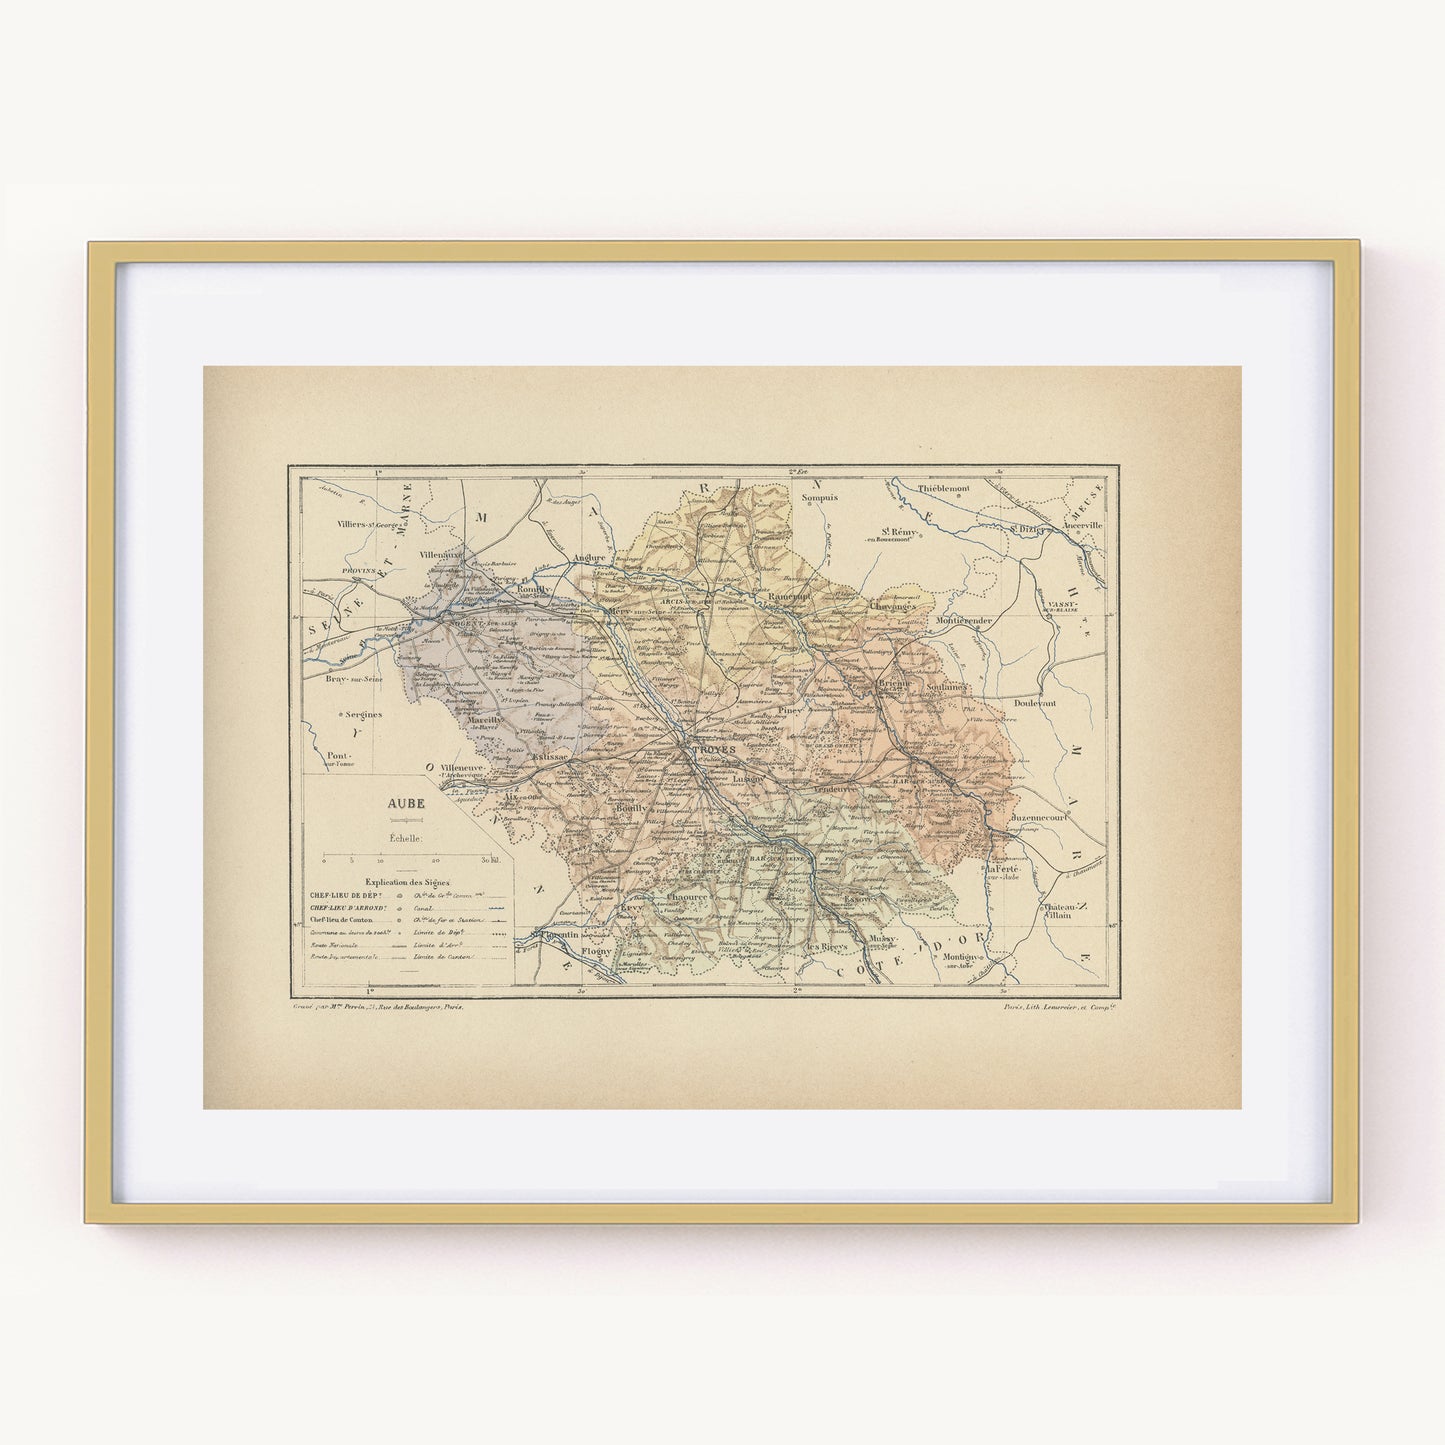 1892 Aube Map